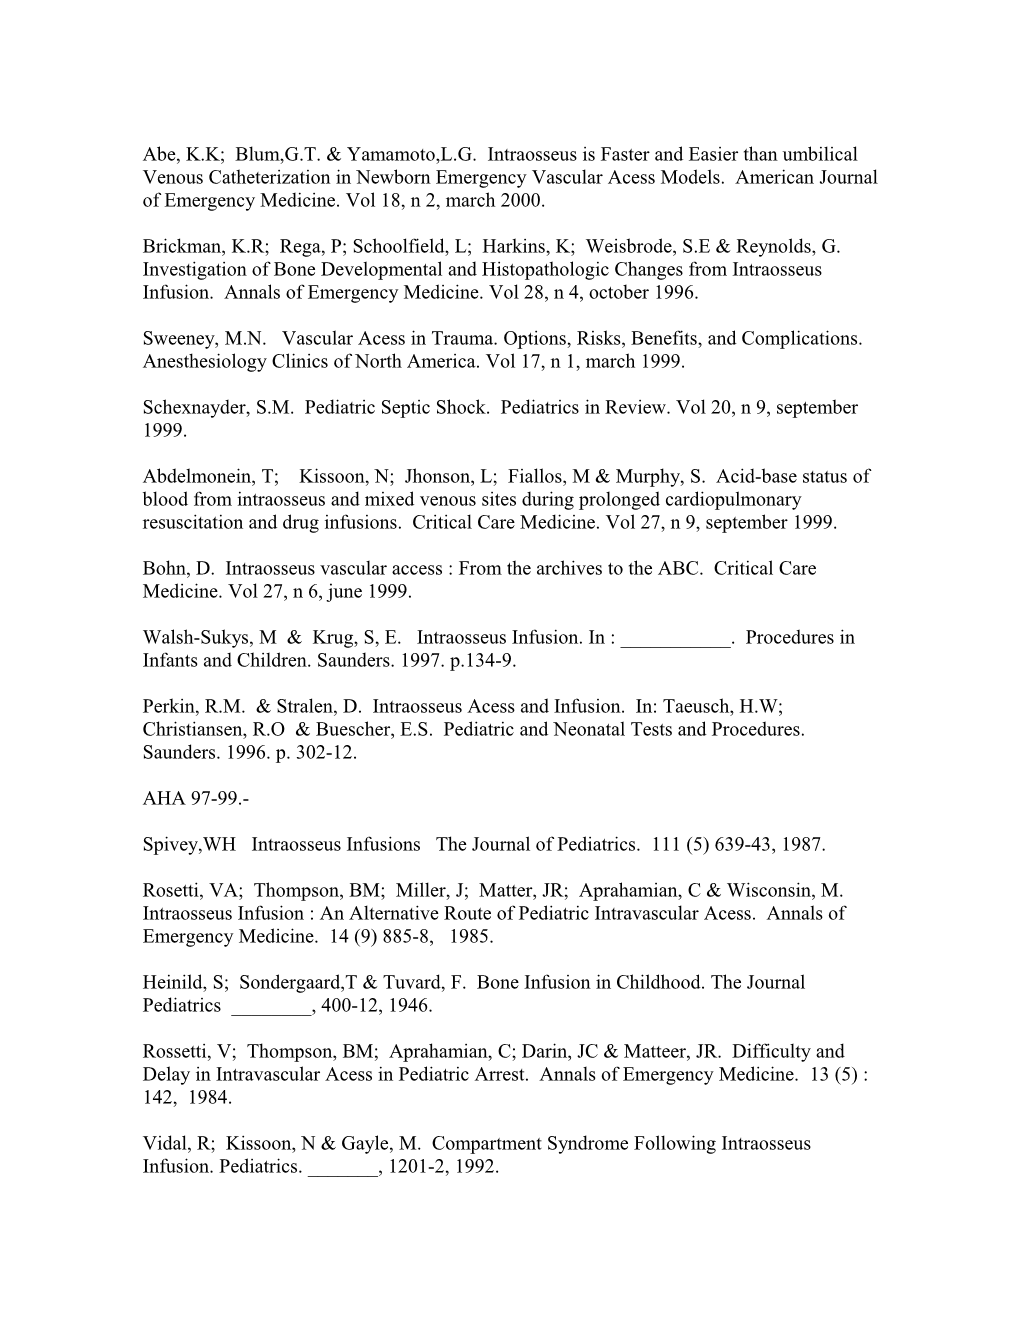 Schexnayder, S.M. Pediatric Septic Shock. Pediatrics in Review. Vol 20, N 9, September 1999